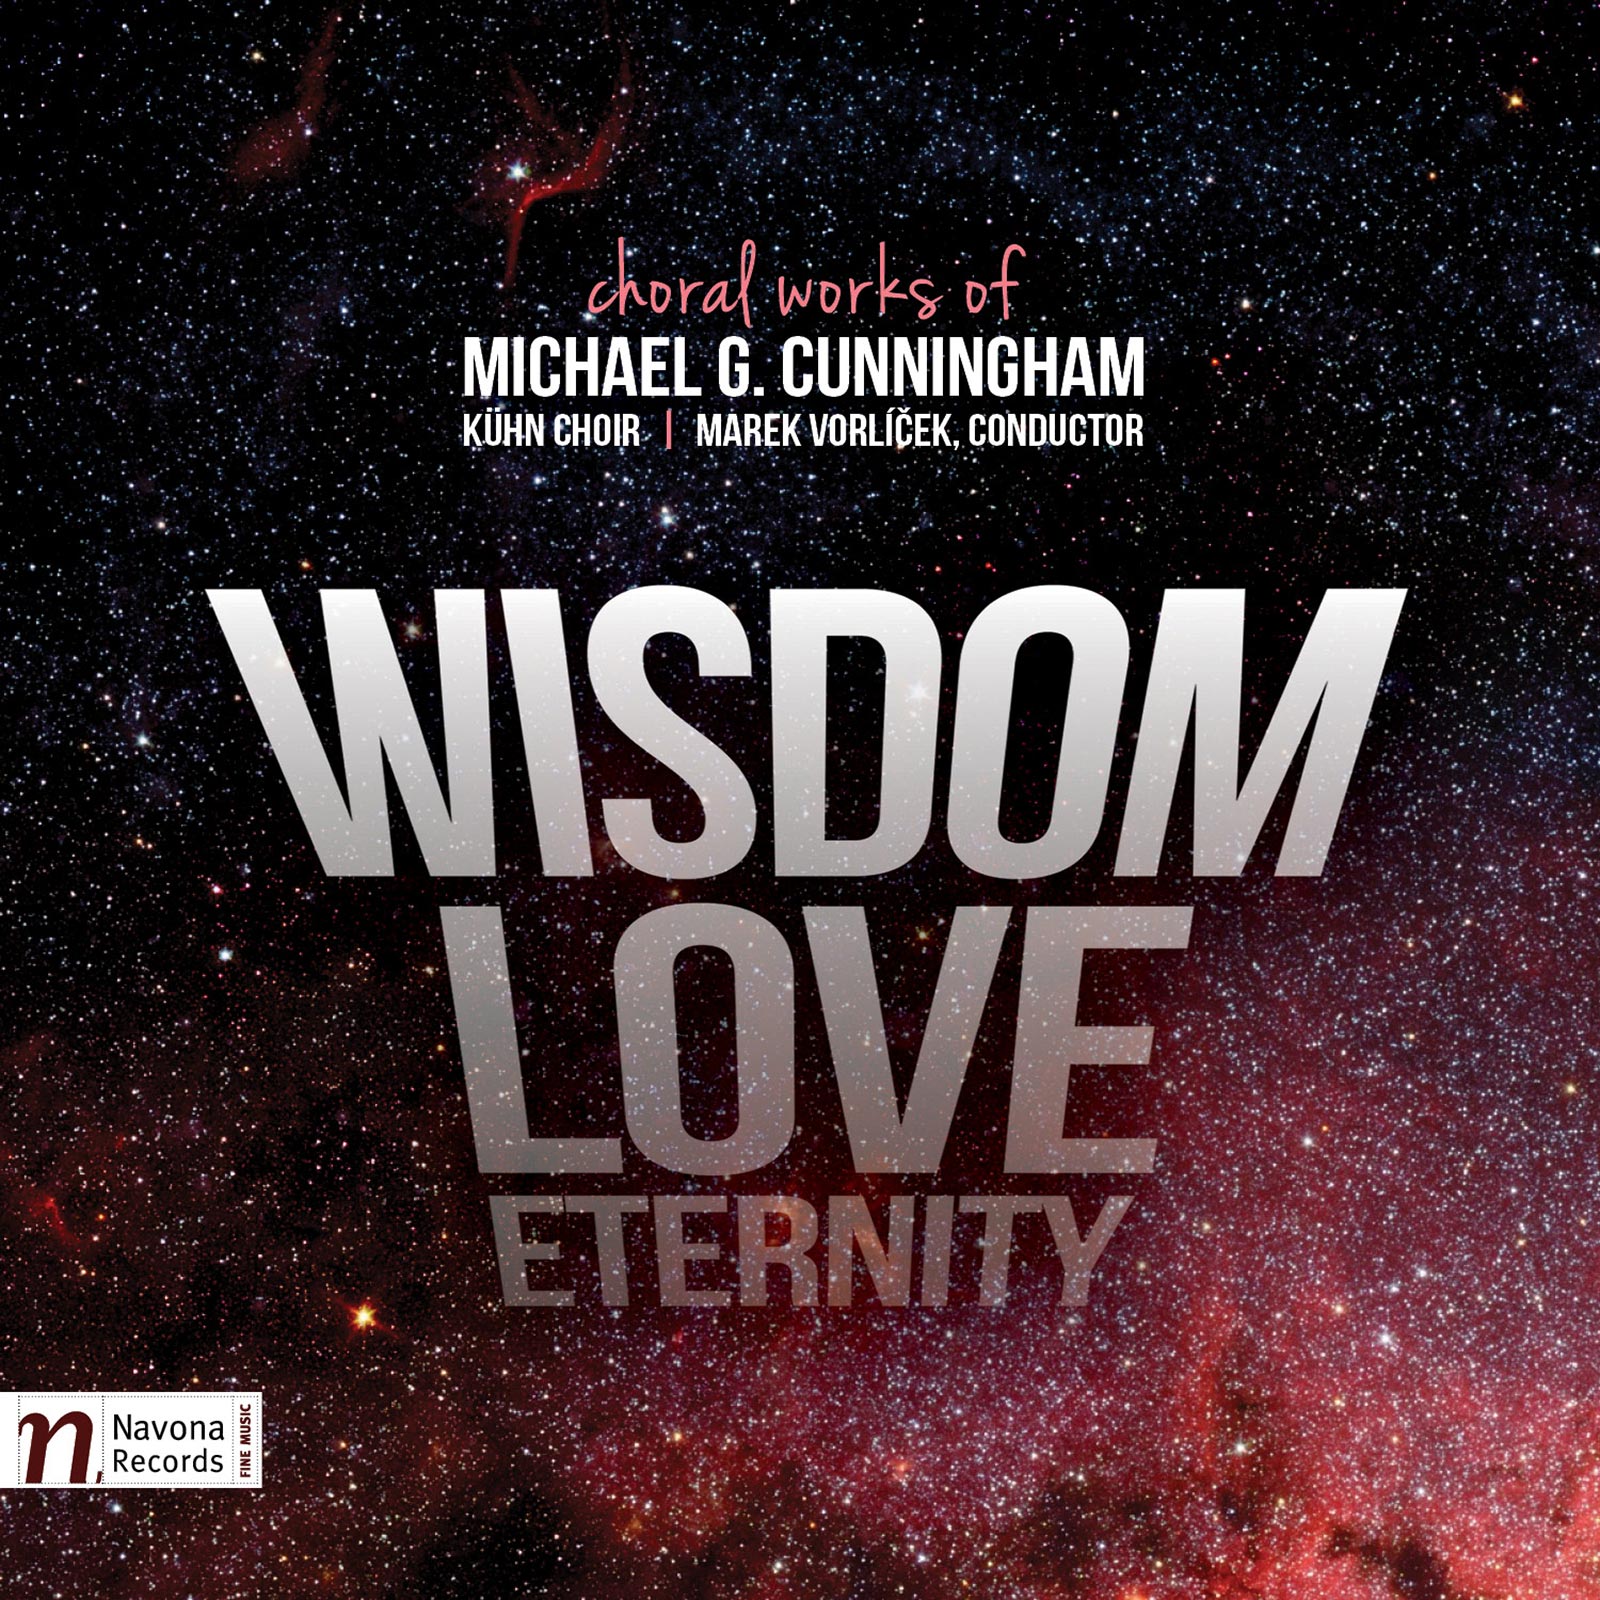 WISDOM-LOVE-ETERNITY - album cover